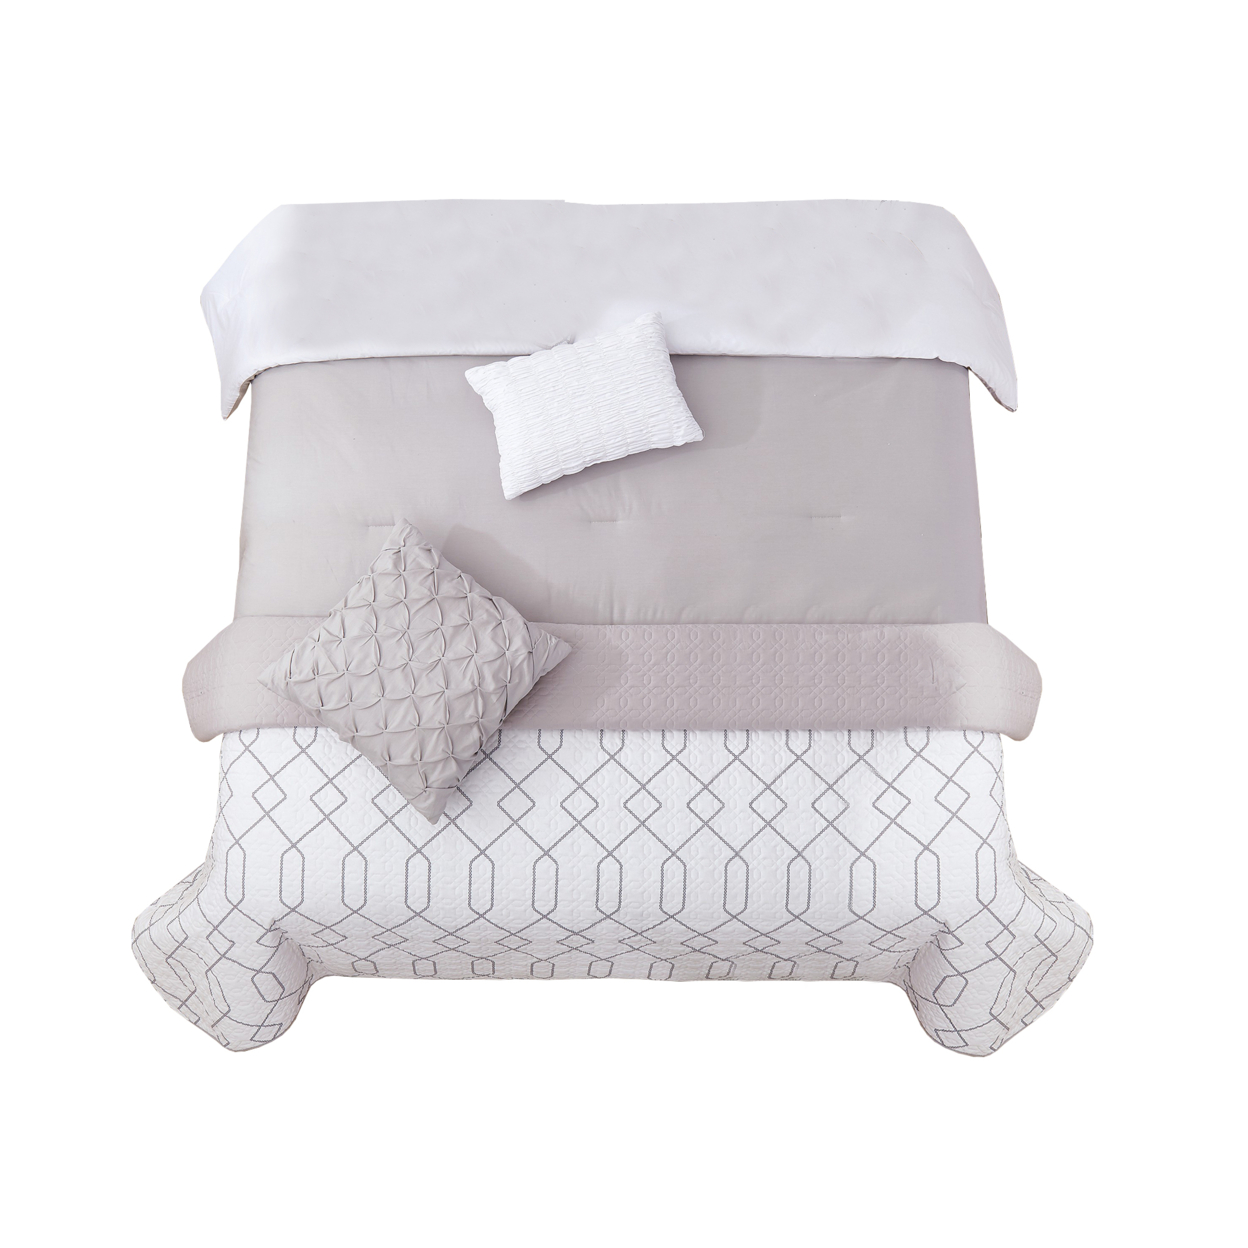 8 Piece Full Size Fabric Comforter Set With Geometric Prints,White And Gray- Saltoro Sherpi